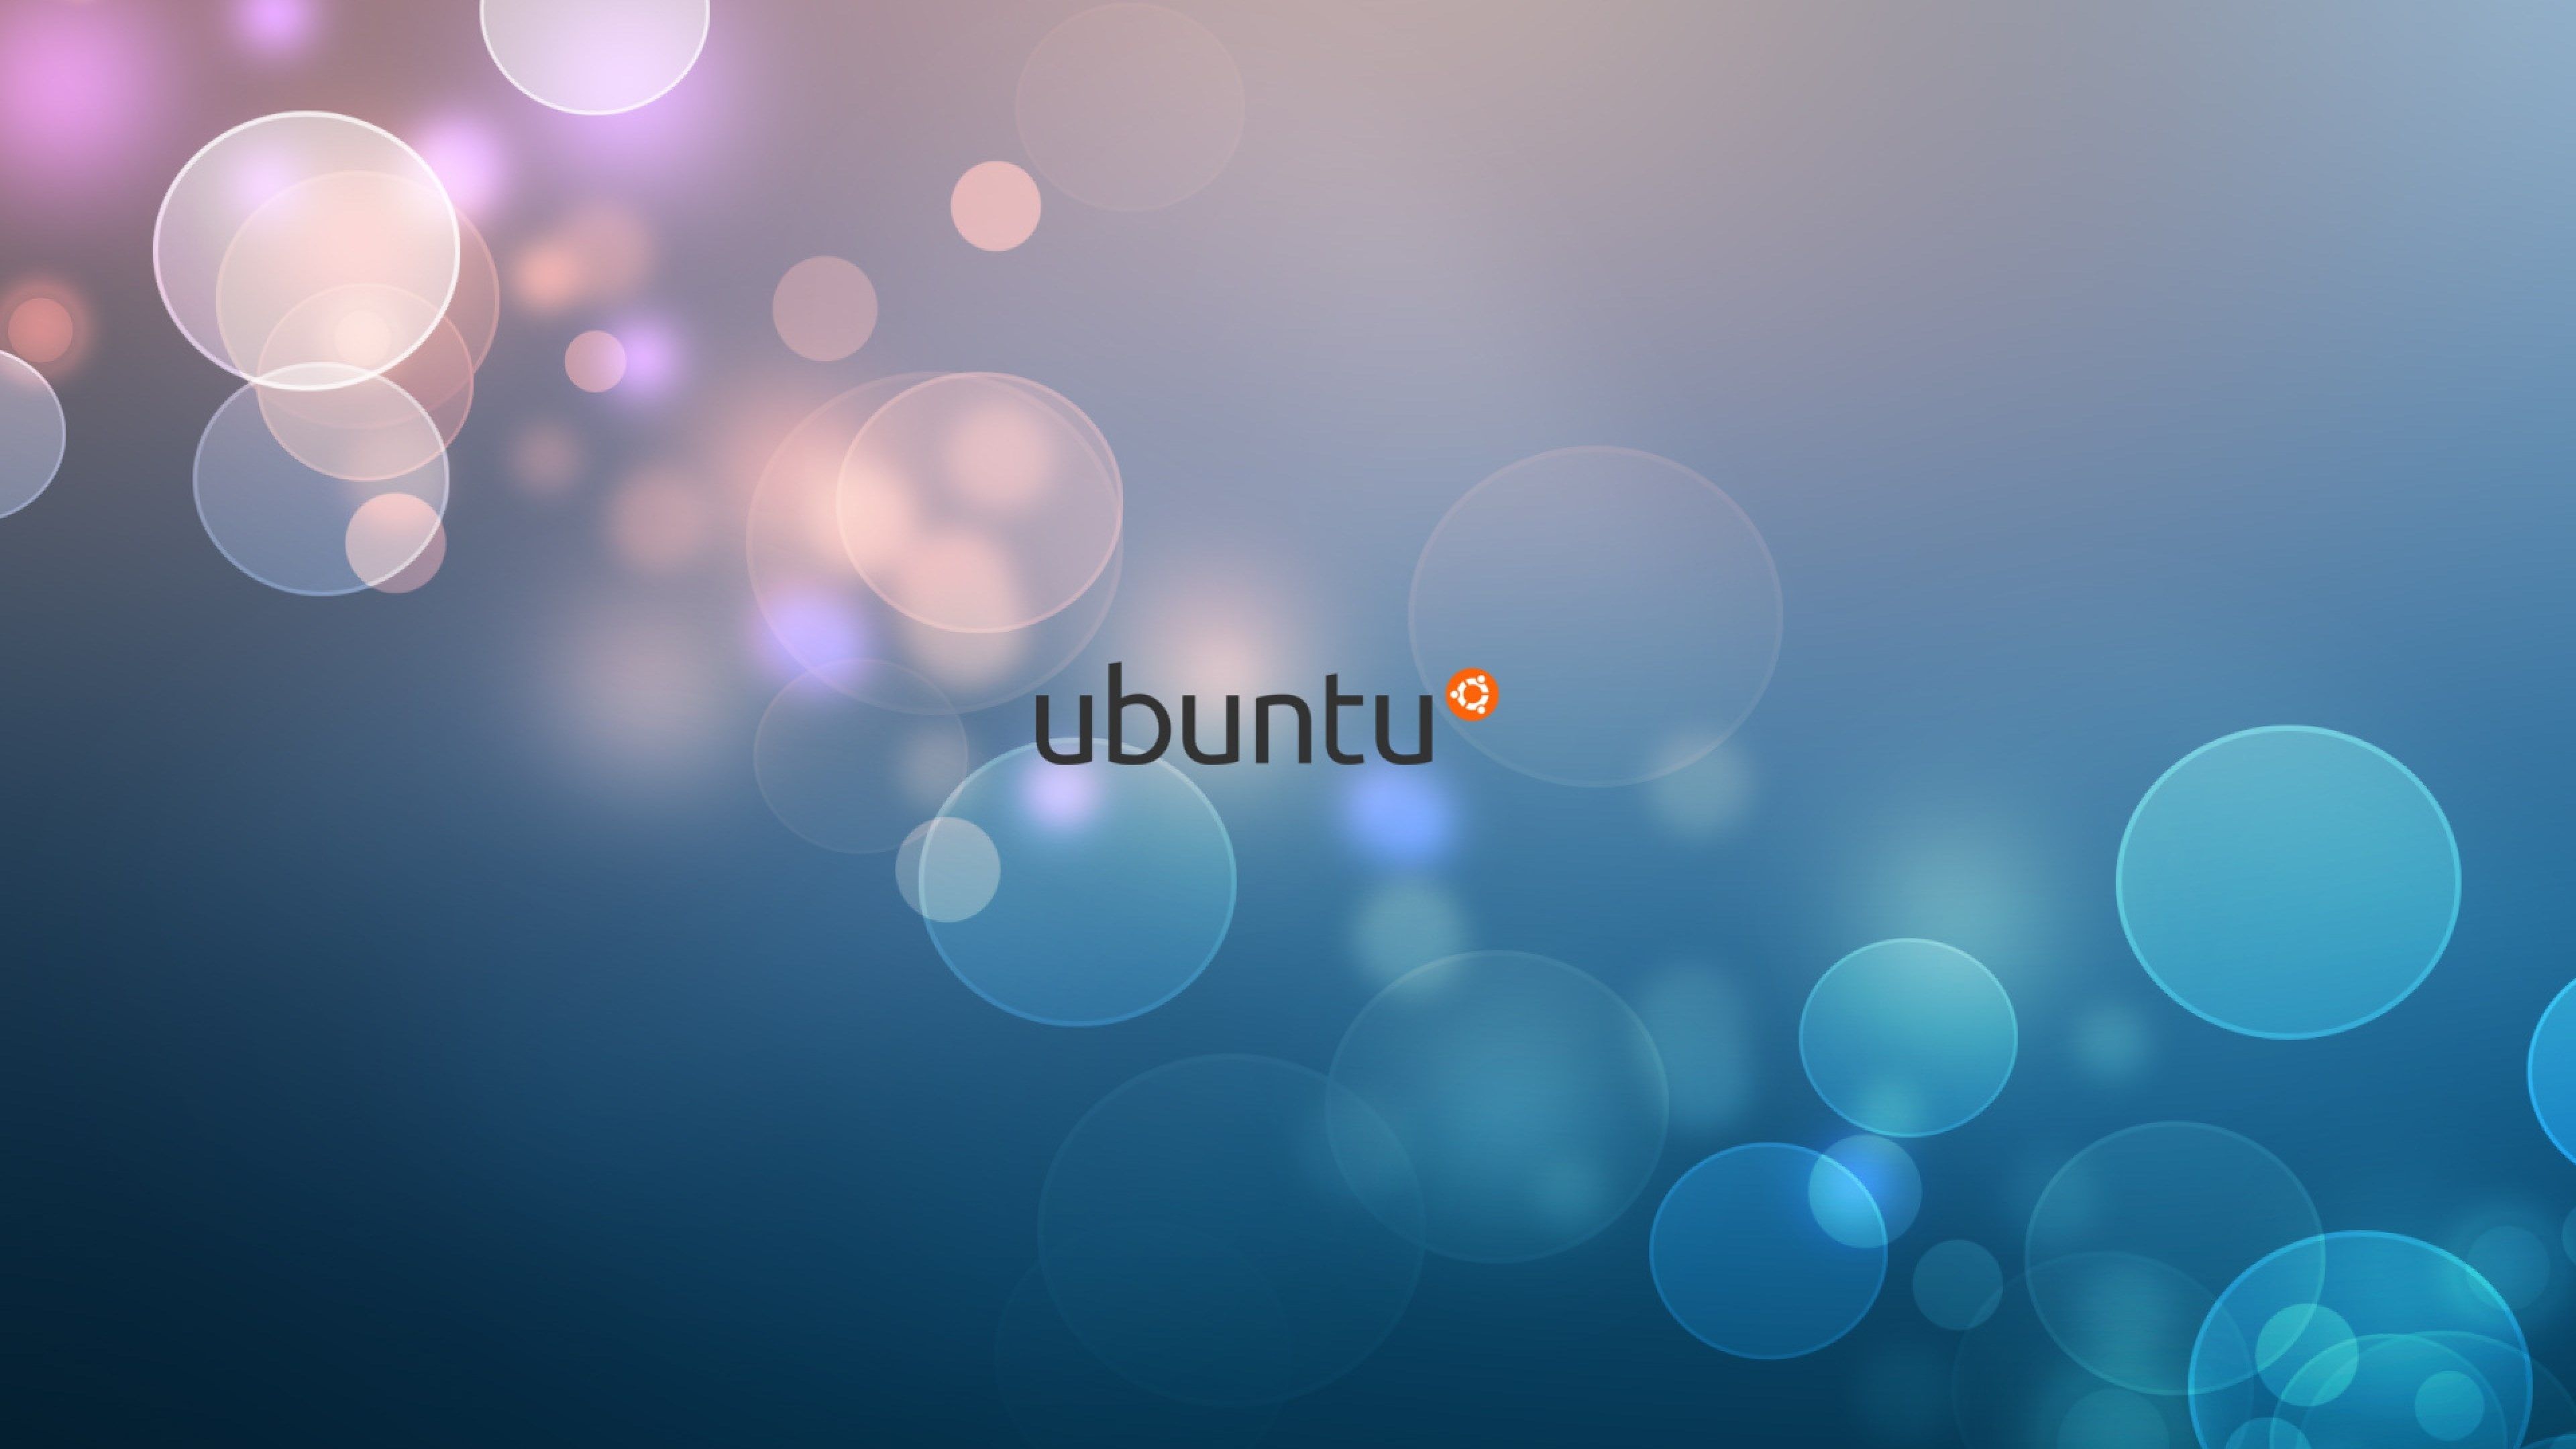 HD wallpaper: ubuntu 4k for desktop, science, research, biology, no people 4K of Wallpaper for Andriod